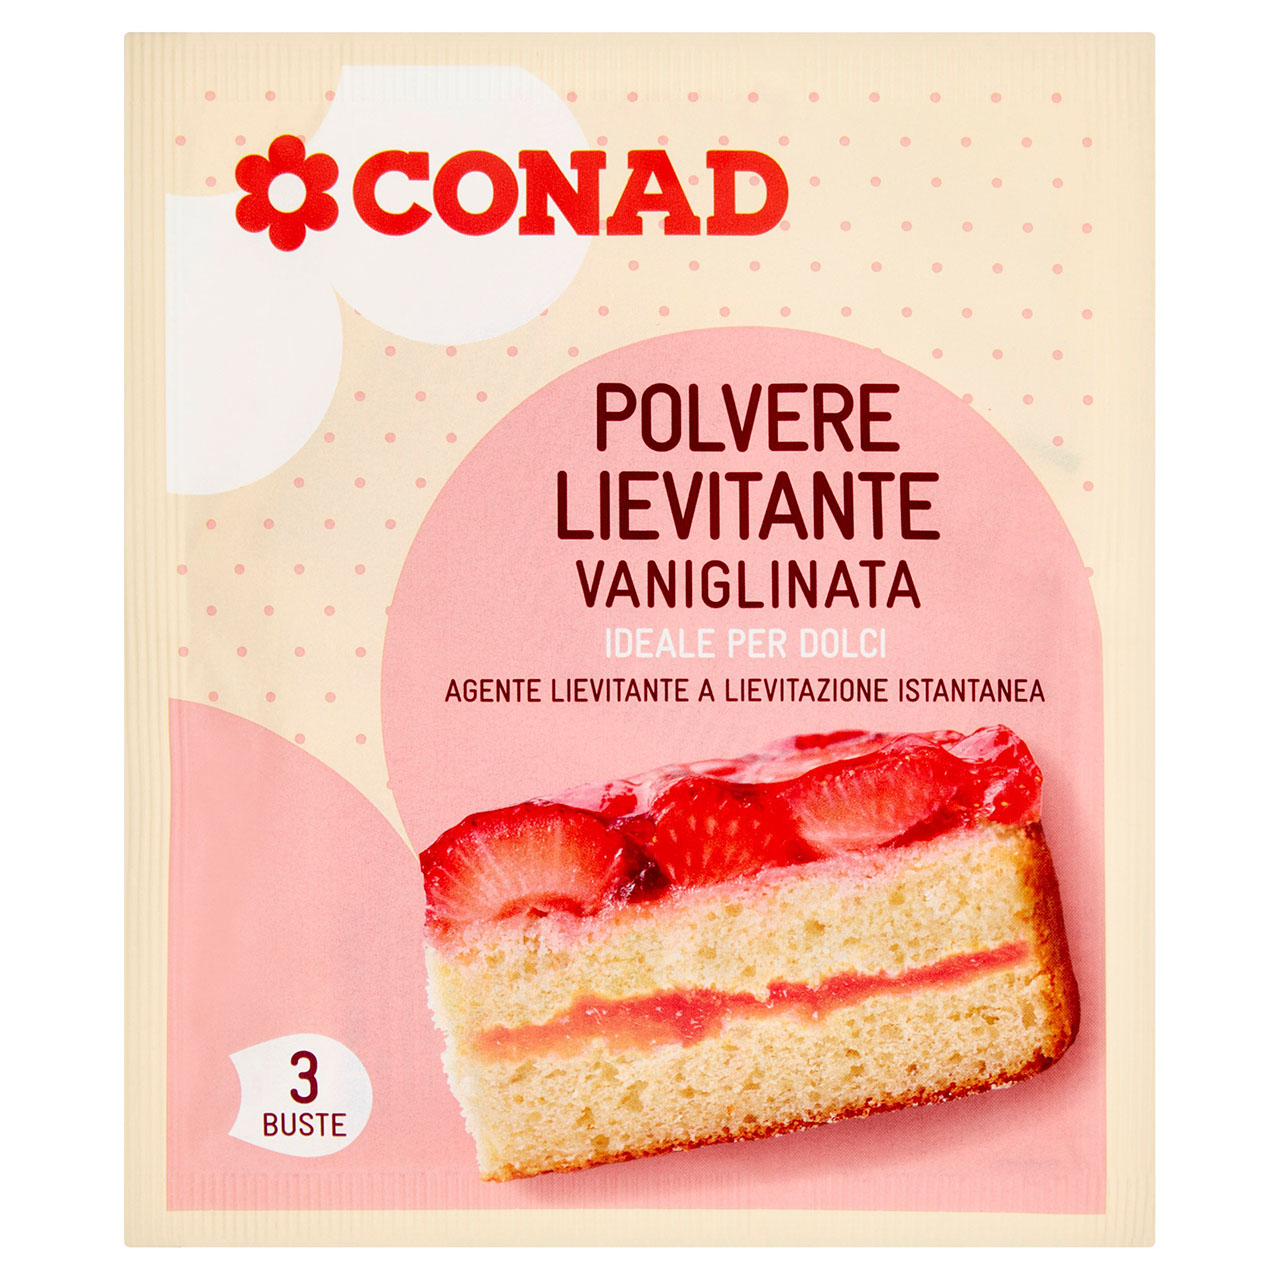 Polvere lievitante vanigliata 3x16 g Conad online